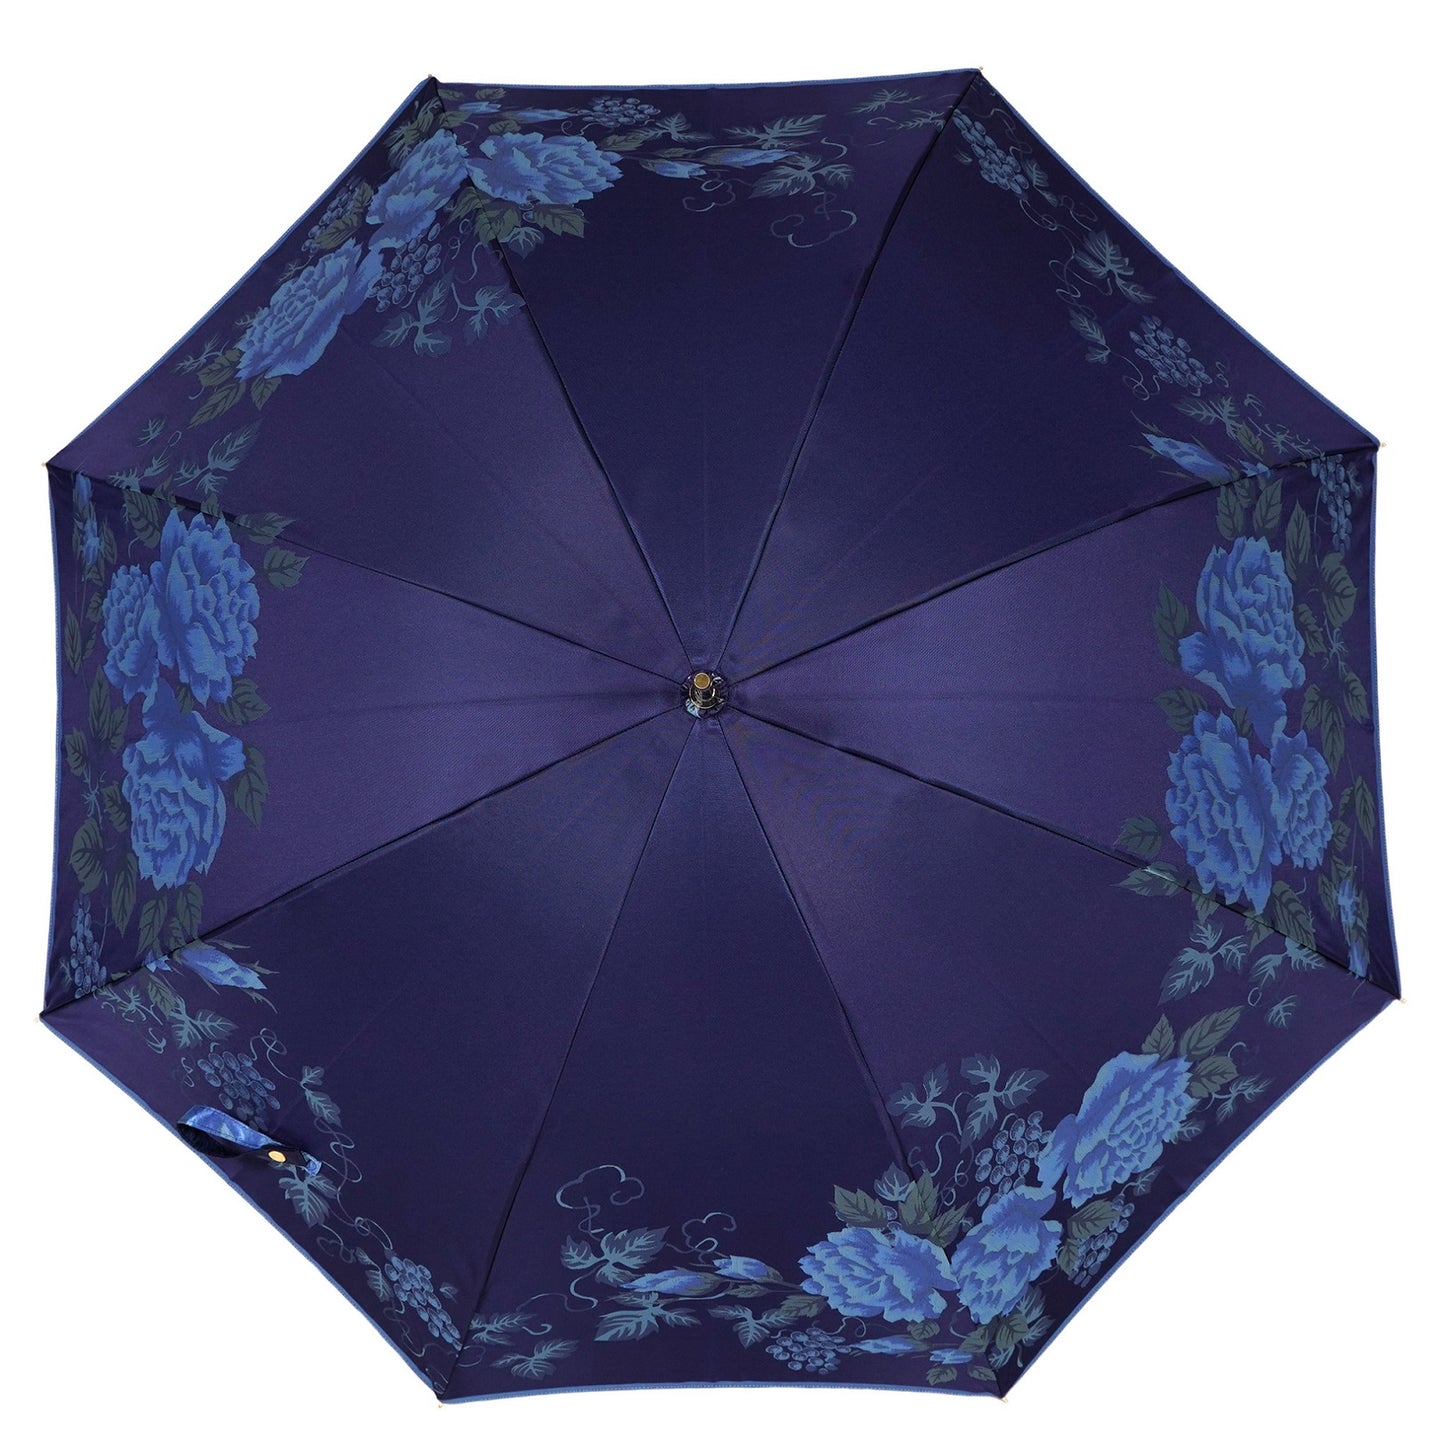 Rain & Sun Umbrella "Rose and Grape" - By Emotion International